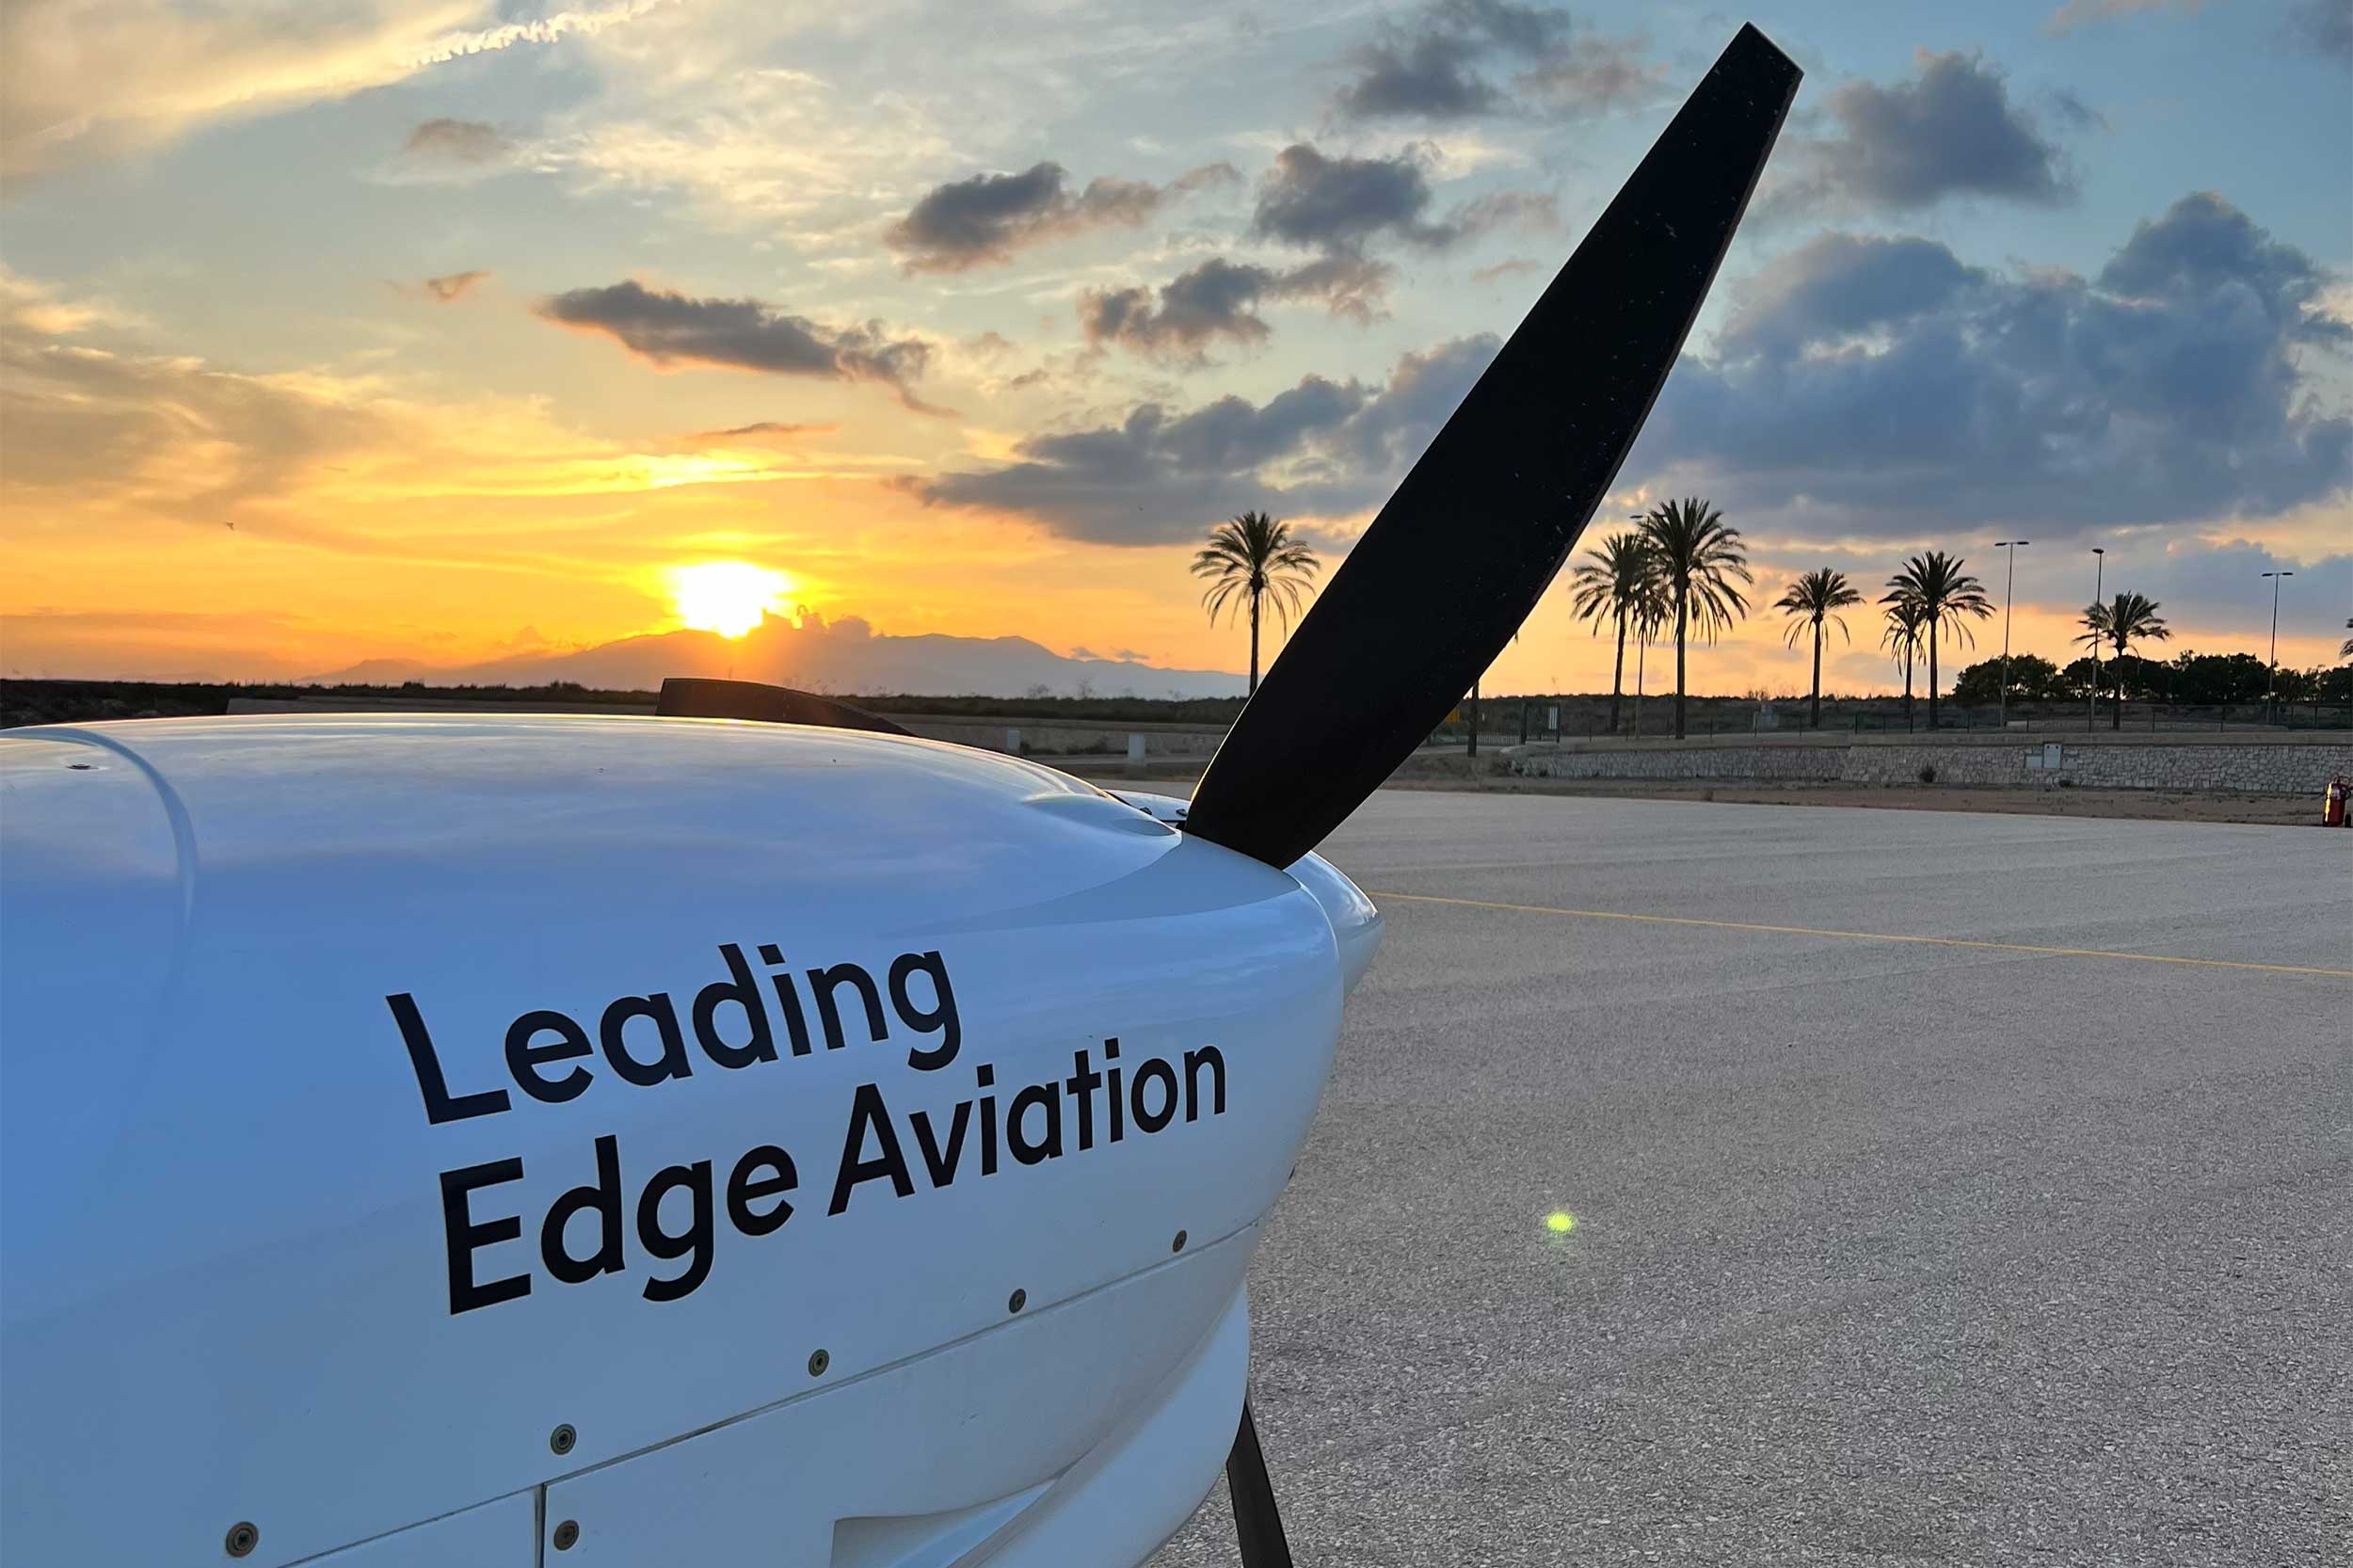 LEA already operates foundation flight training at Alhama